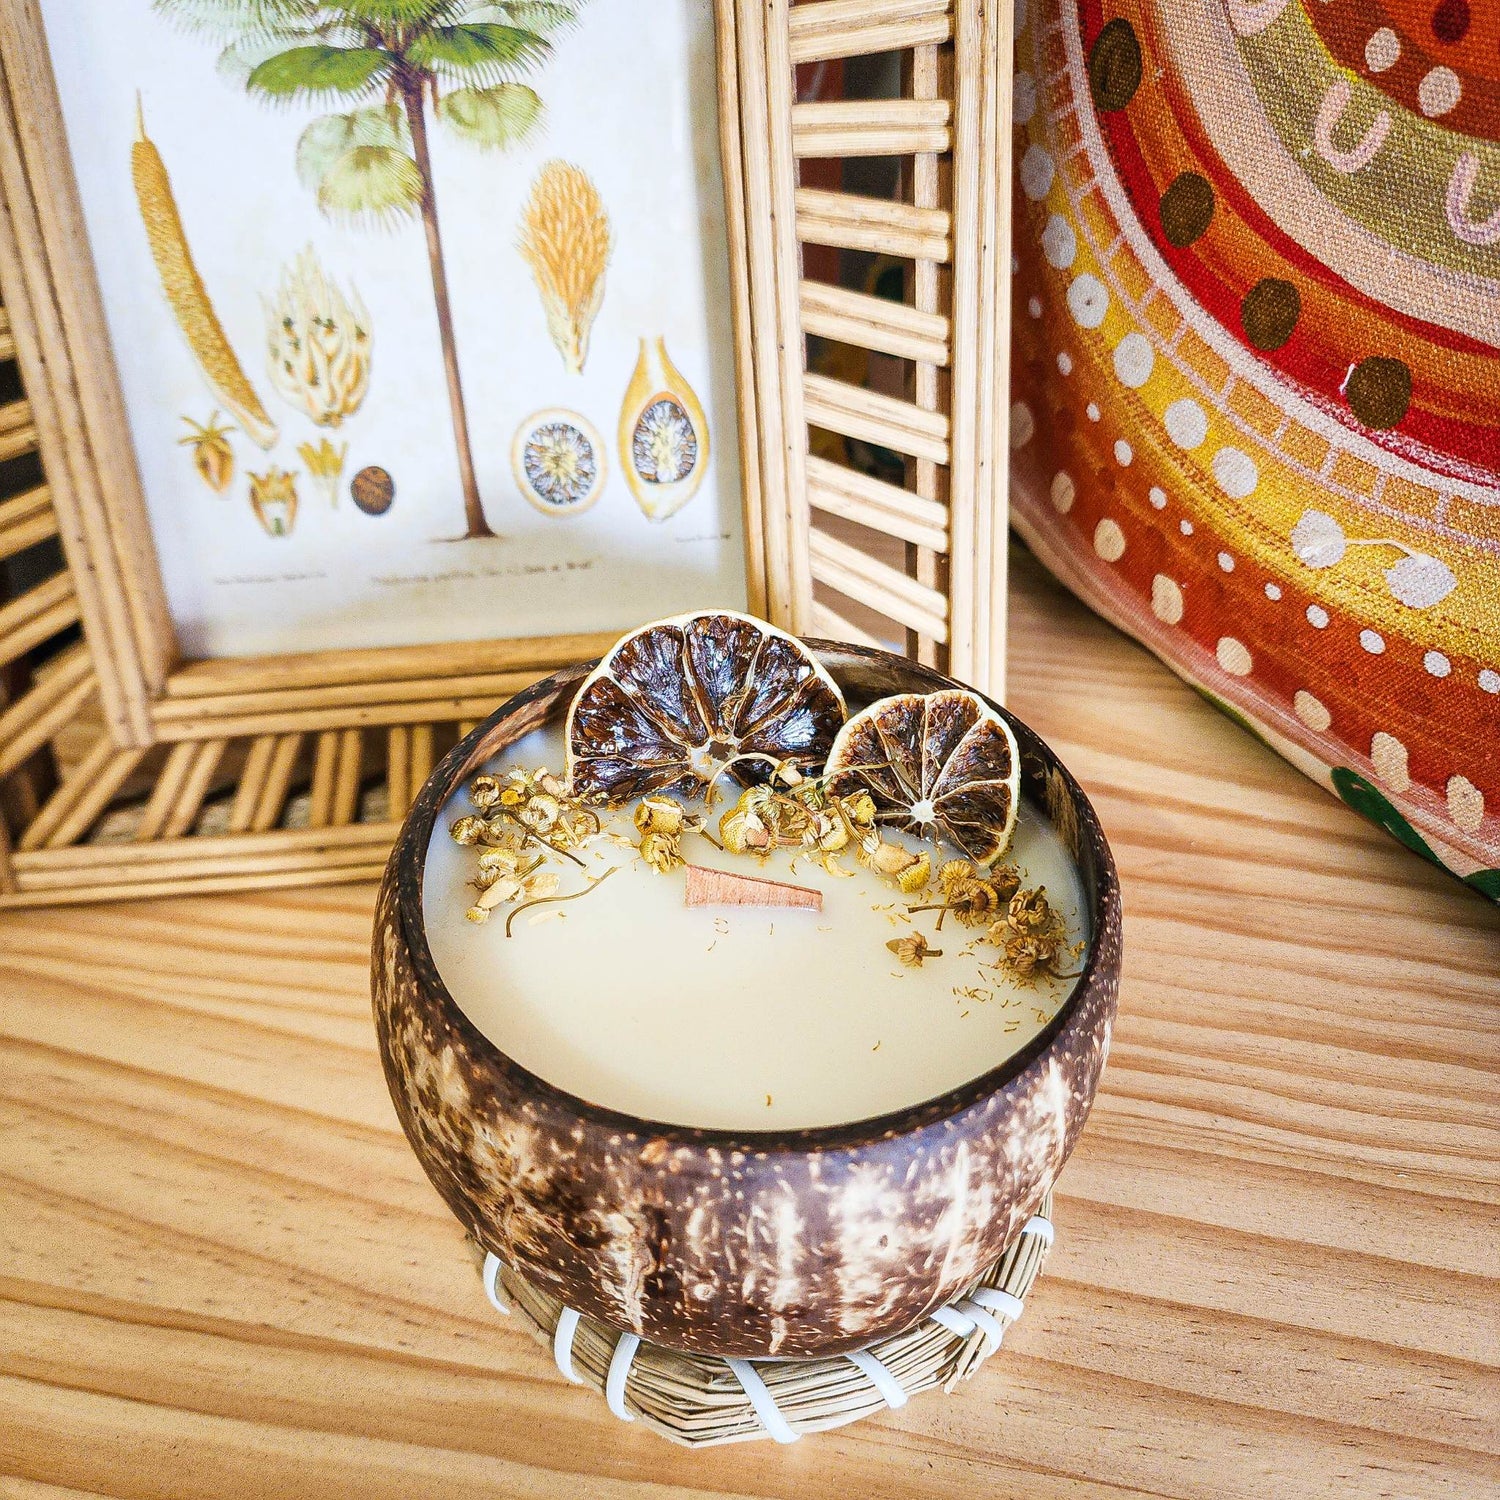 Coconut Shell Candle - Pina Colada